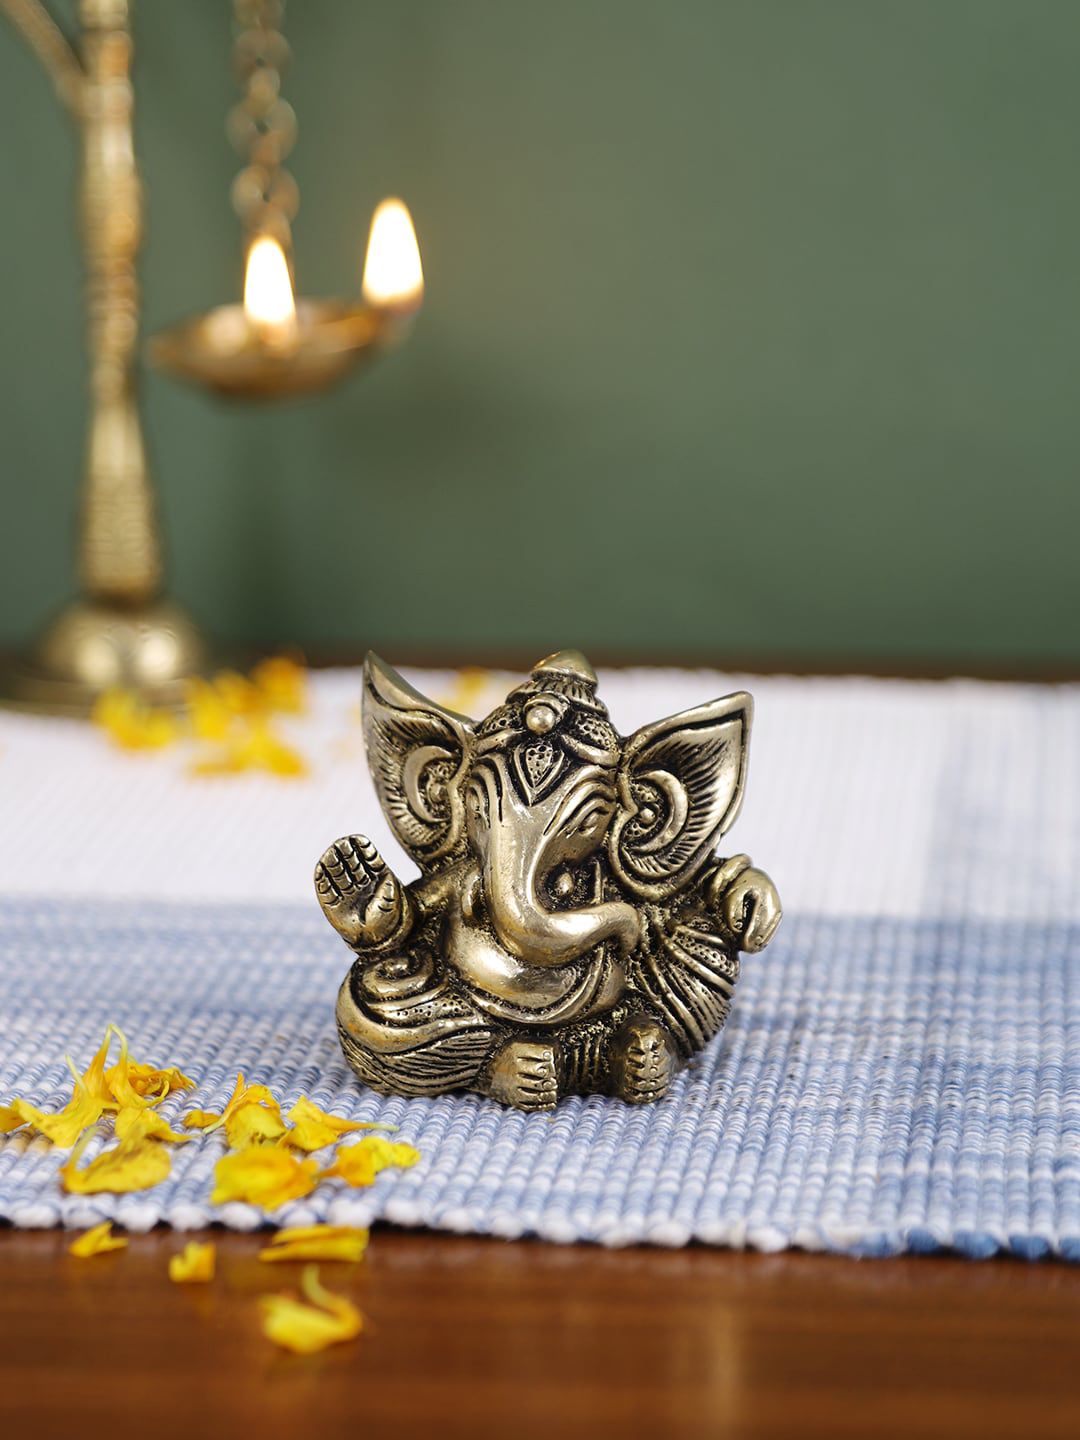 Imli Street Gold-Toned Ganesh 2 Hands Showpiece Price in India